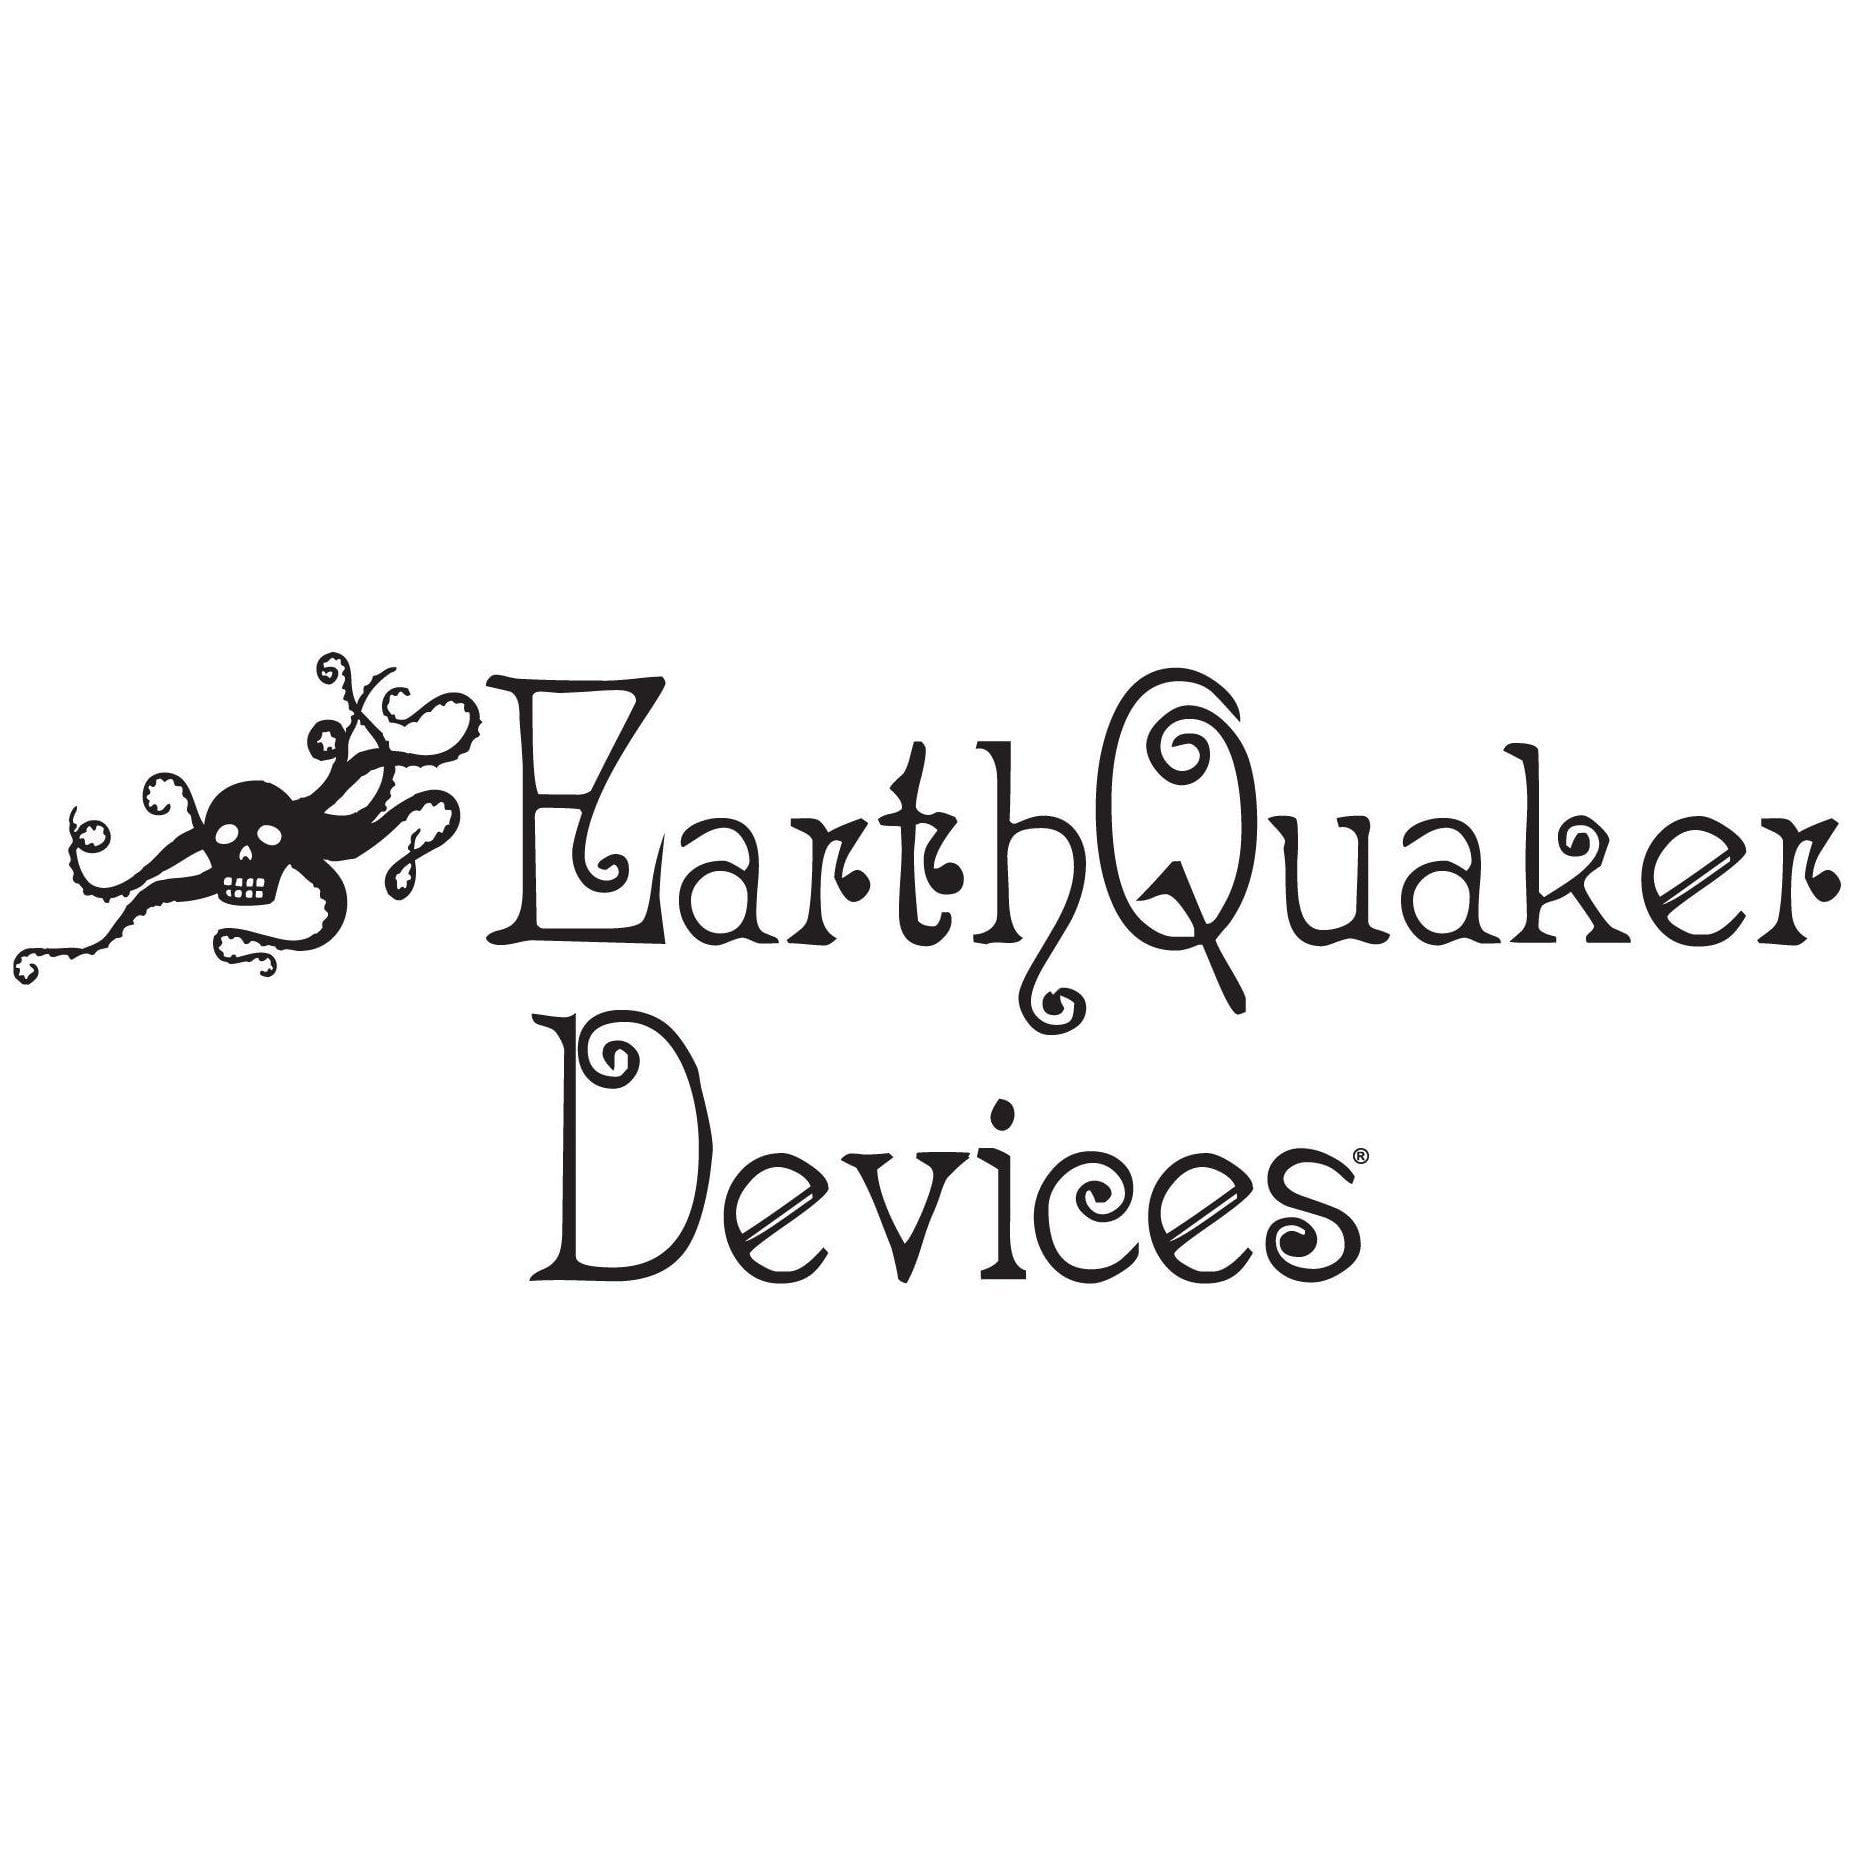 Earthquaker Logo 480 Vertical